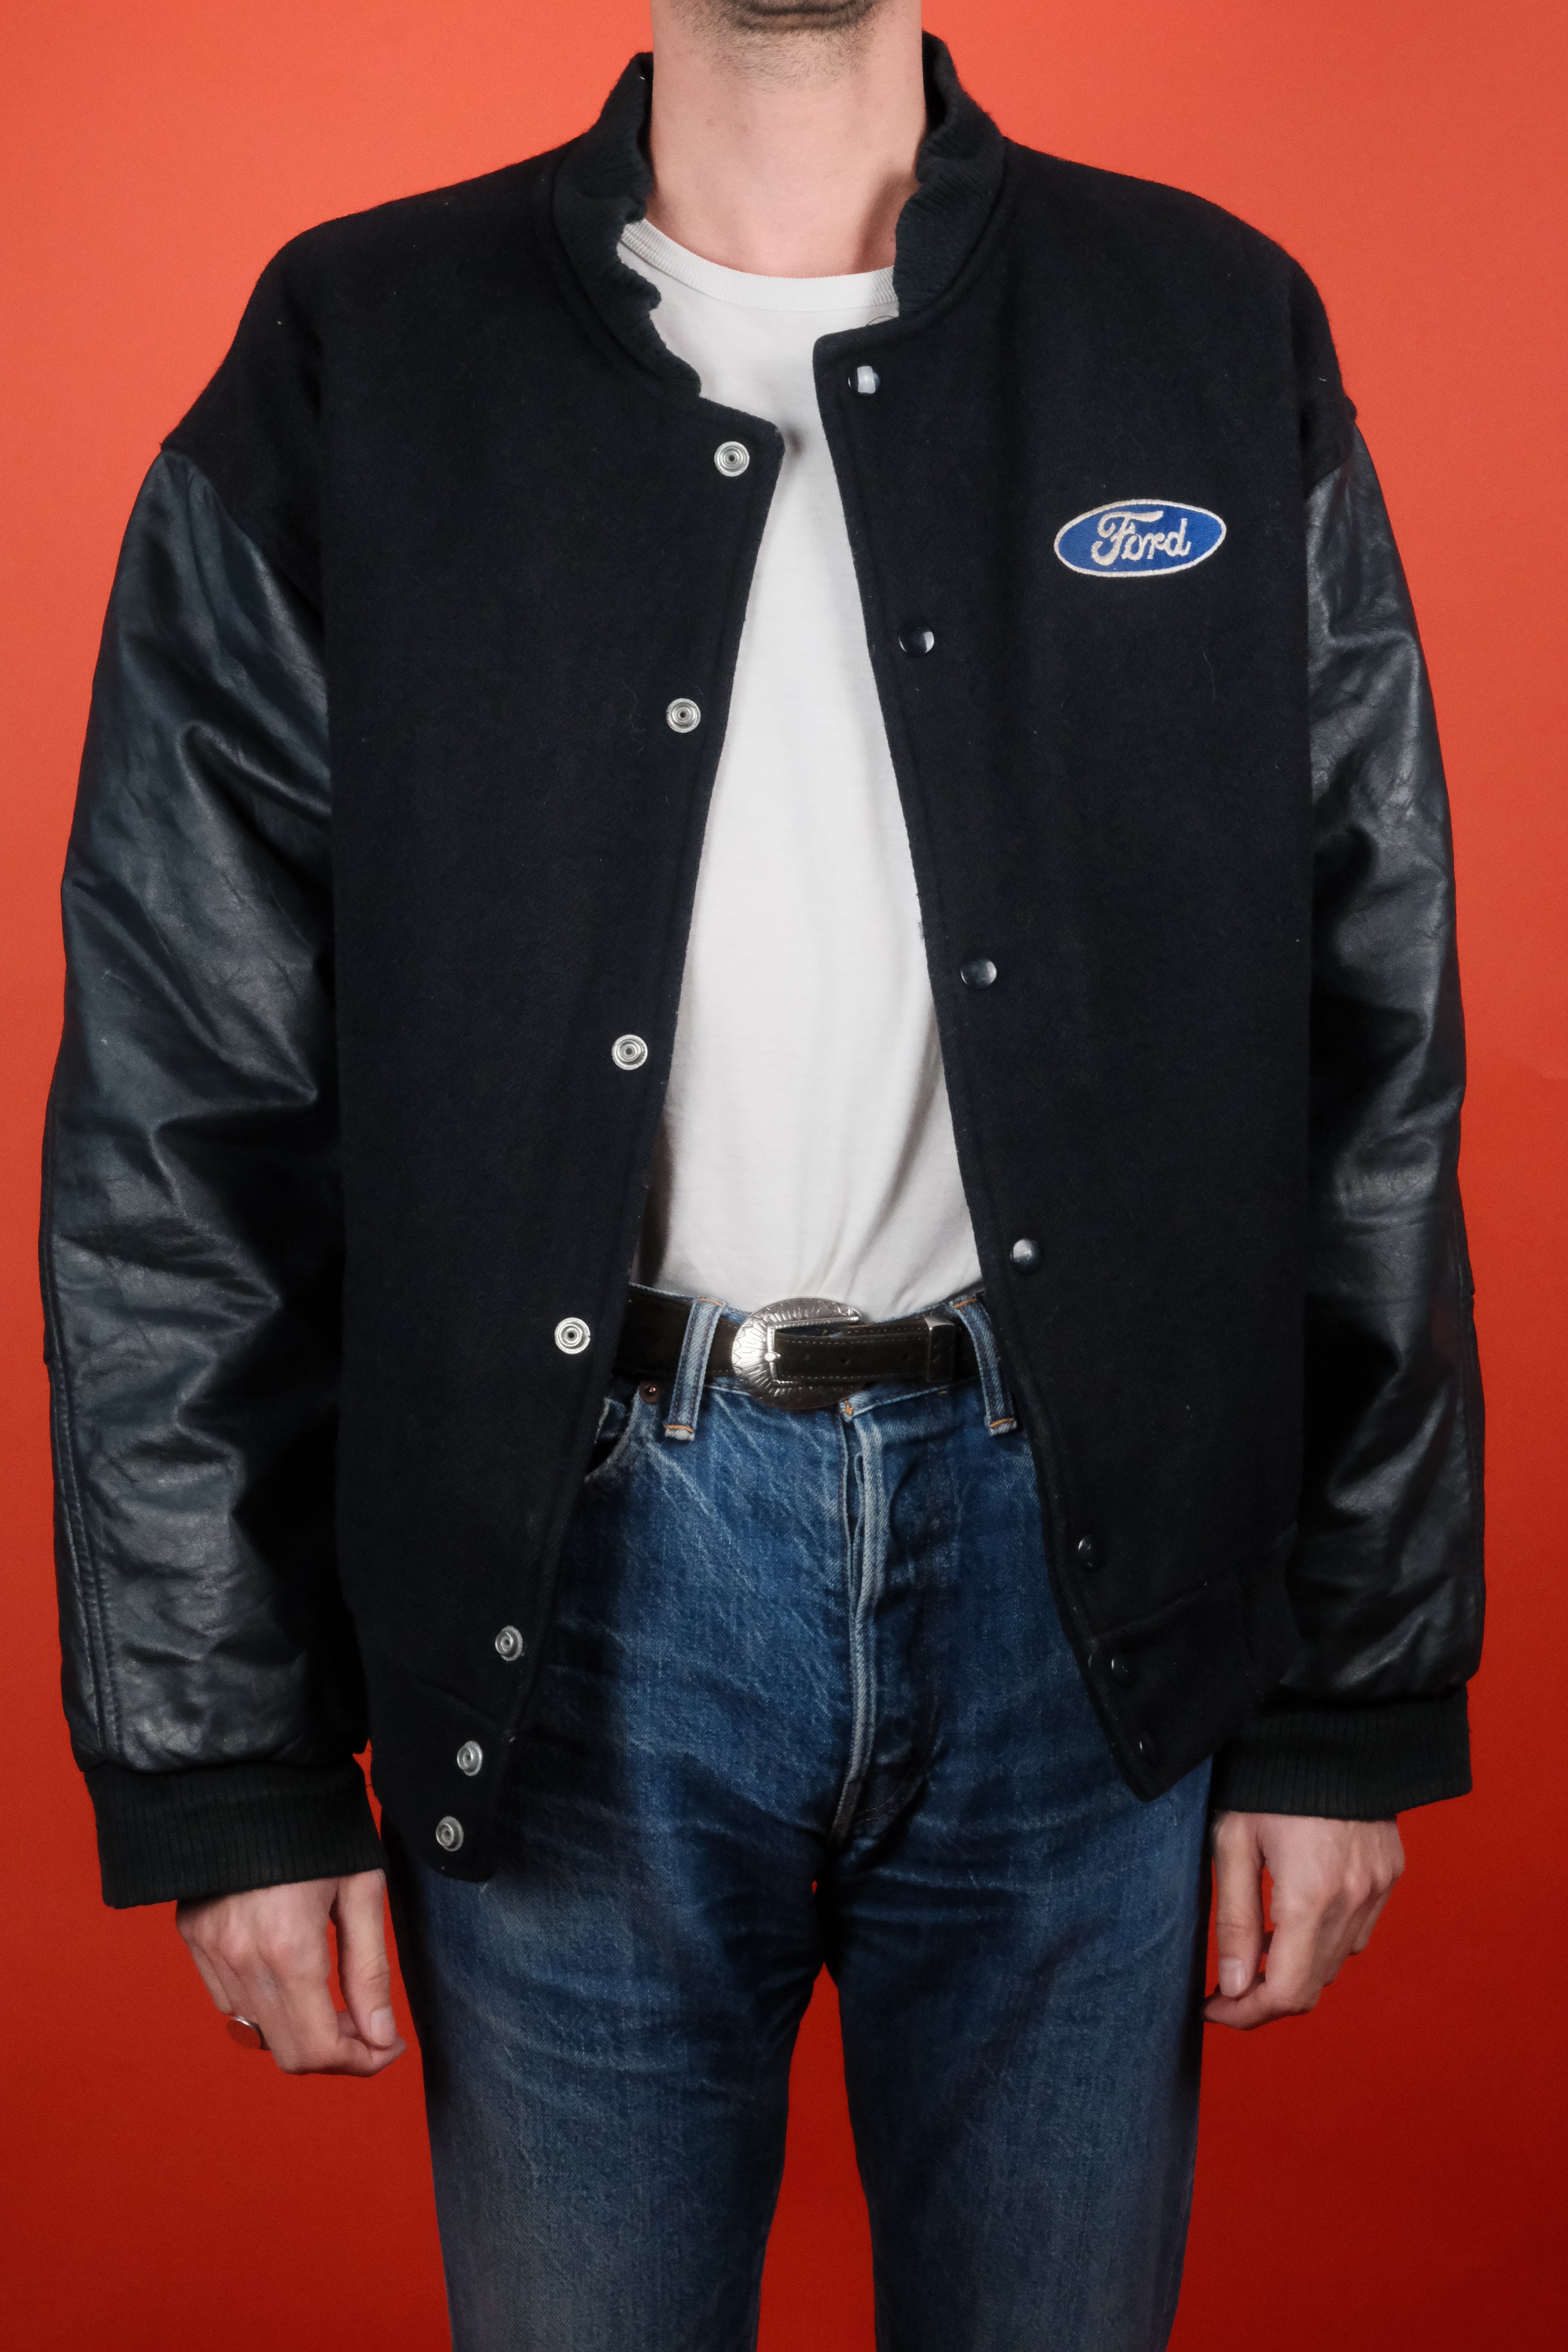 Ford varsity jacket